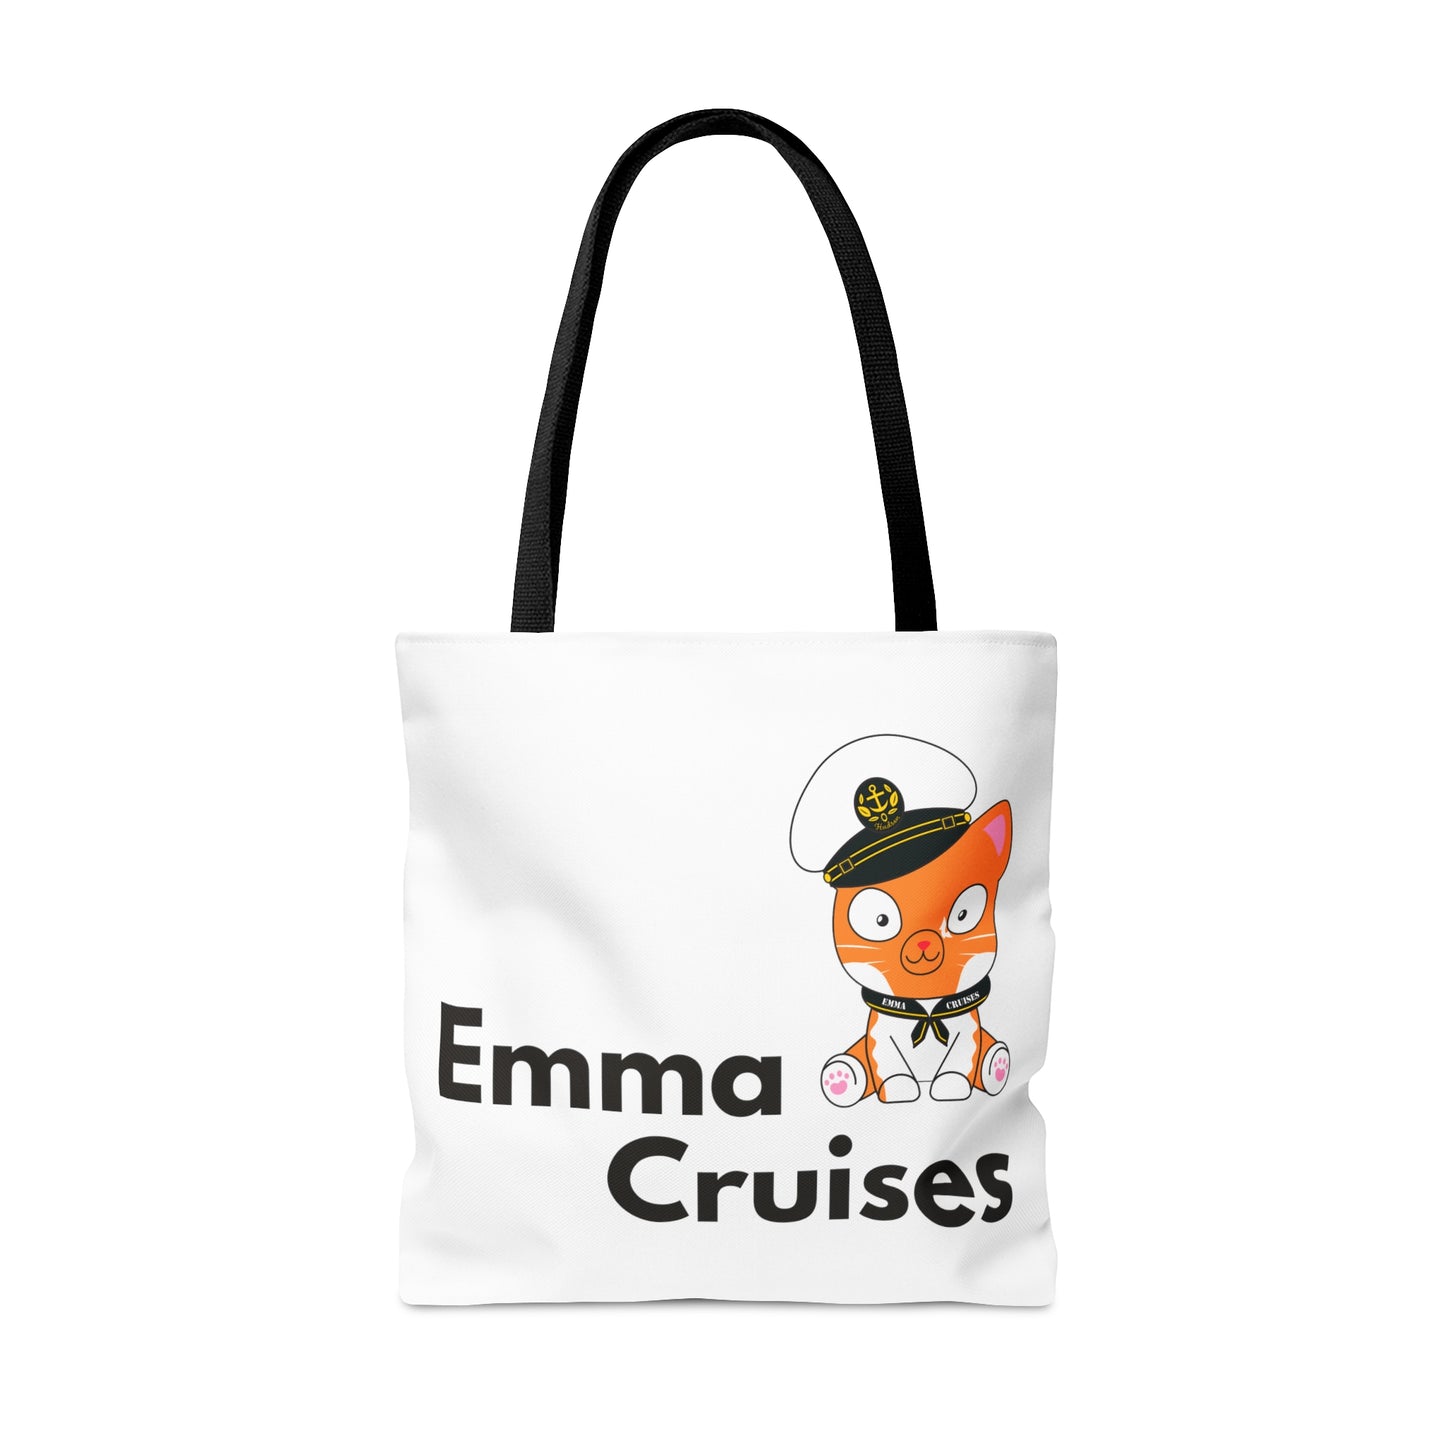 Emma Cruises - Tasche